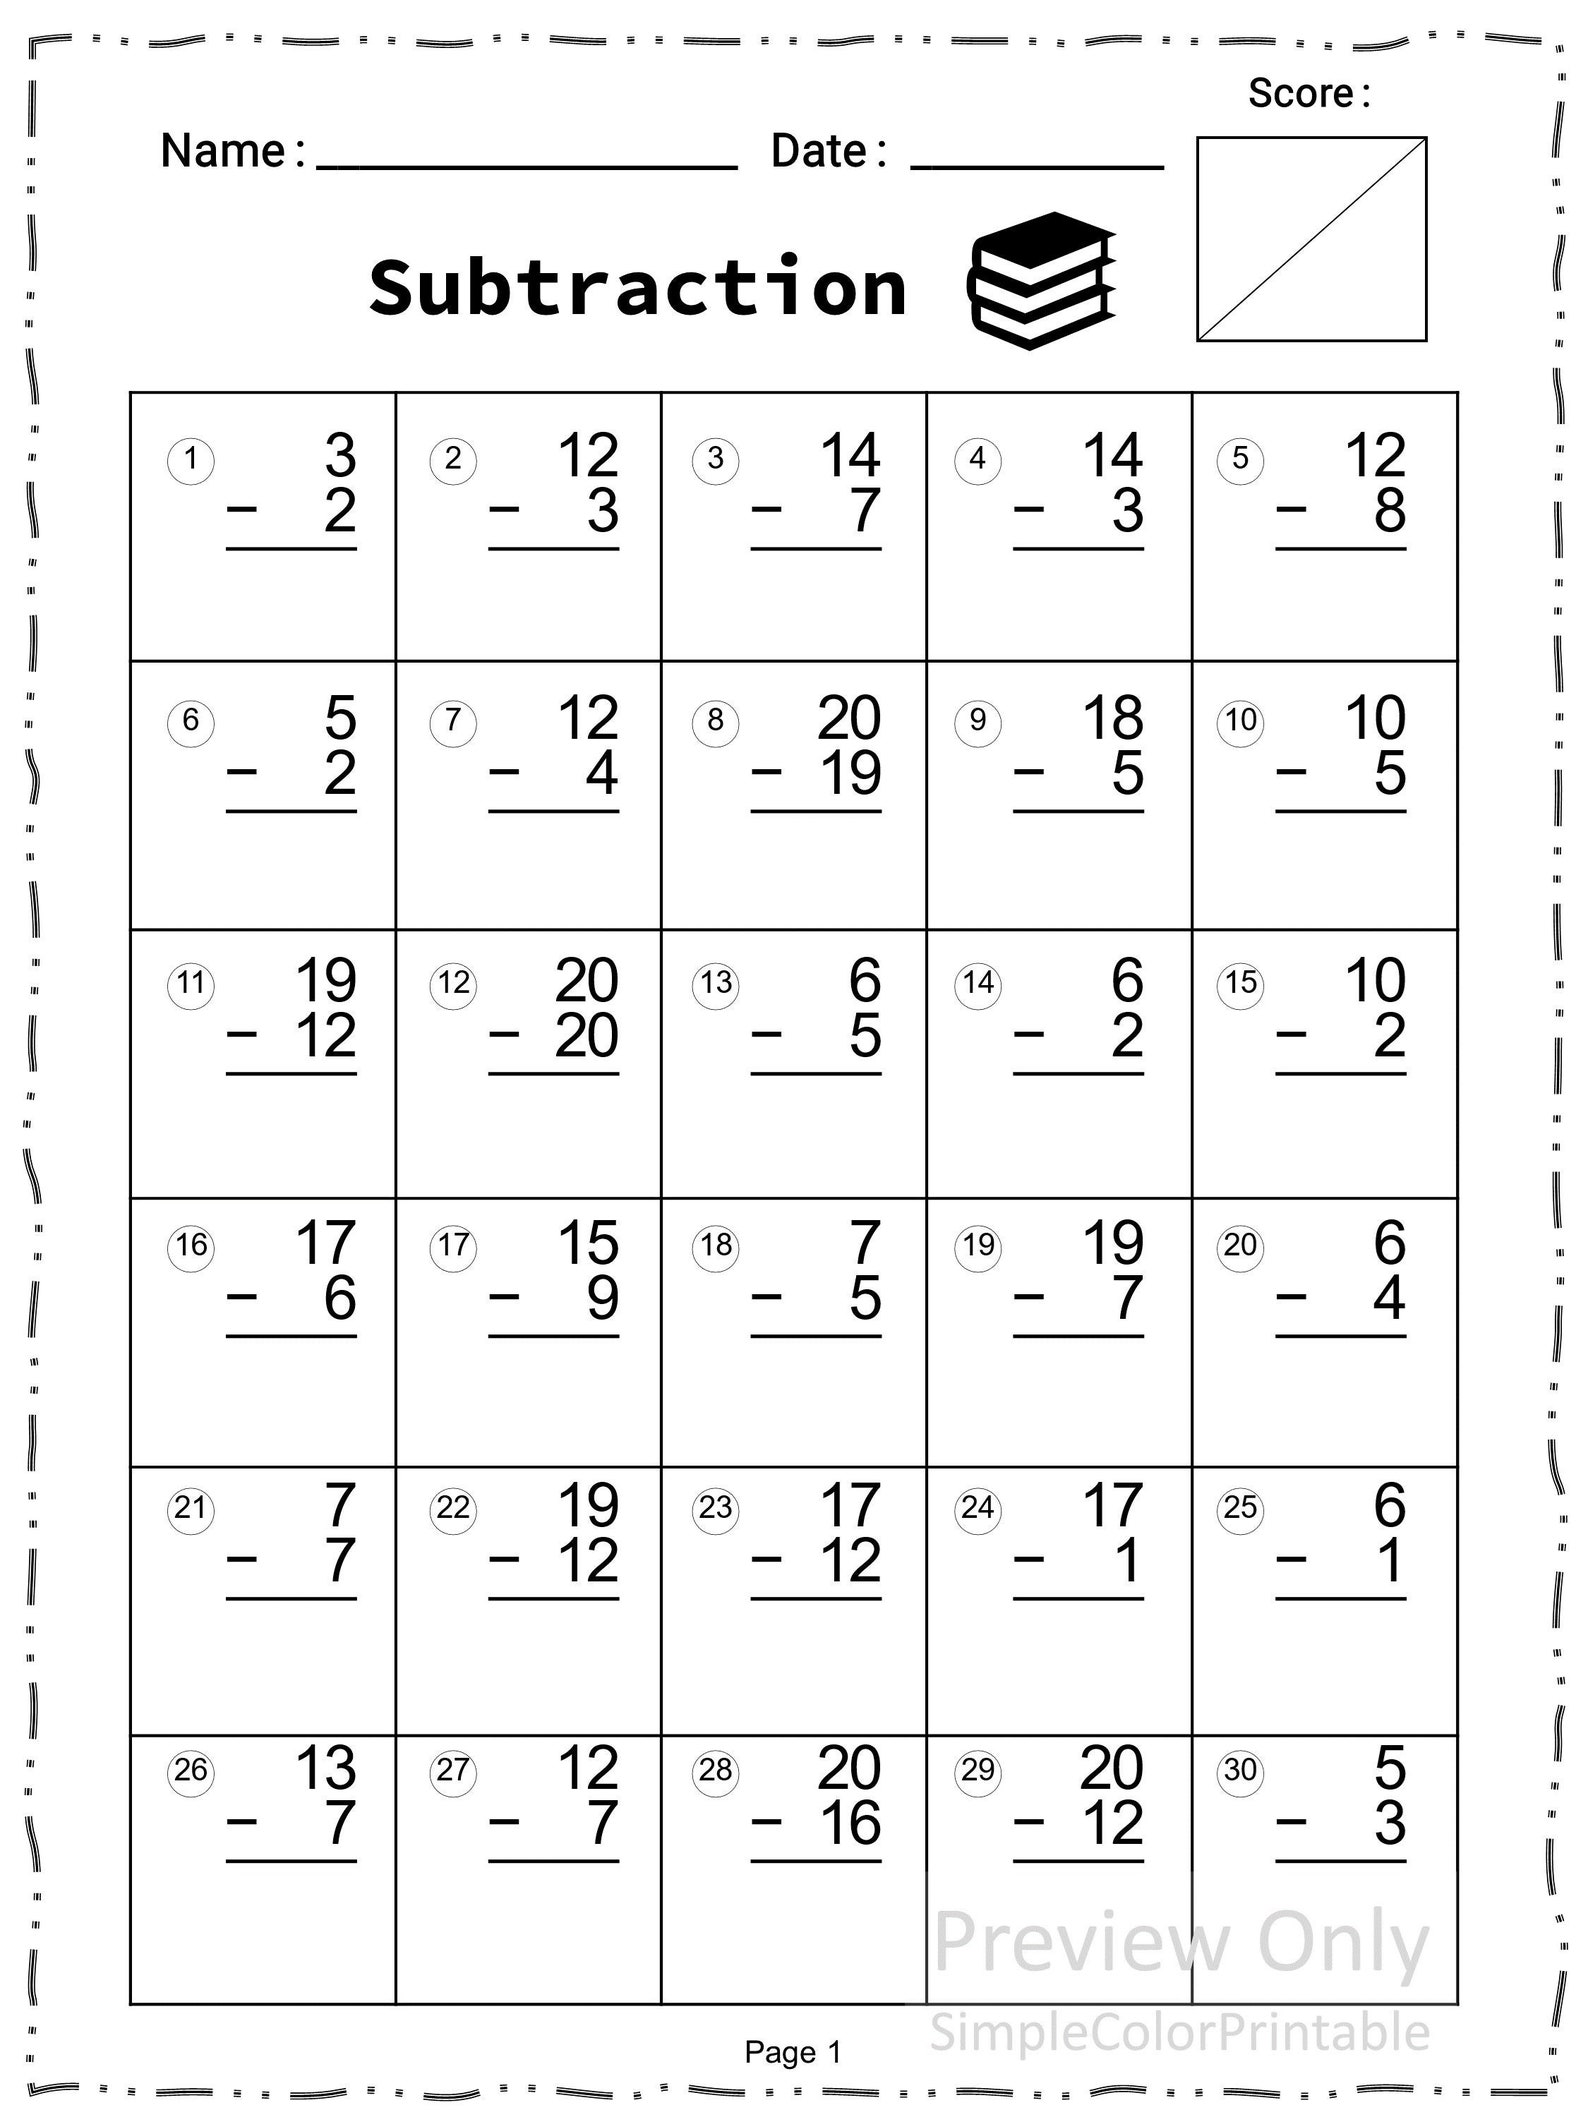 subtraction-worksheets-20-printable-worksheets-numbers-1-20-etsy